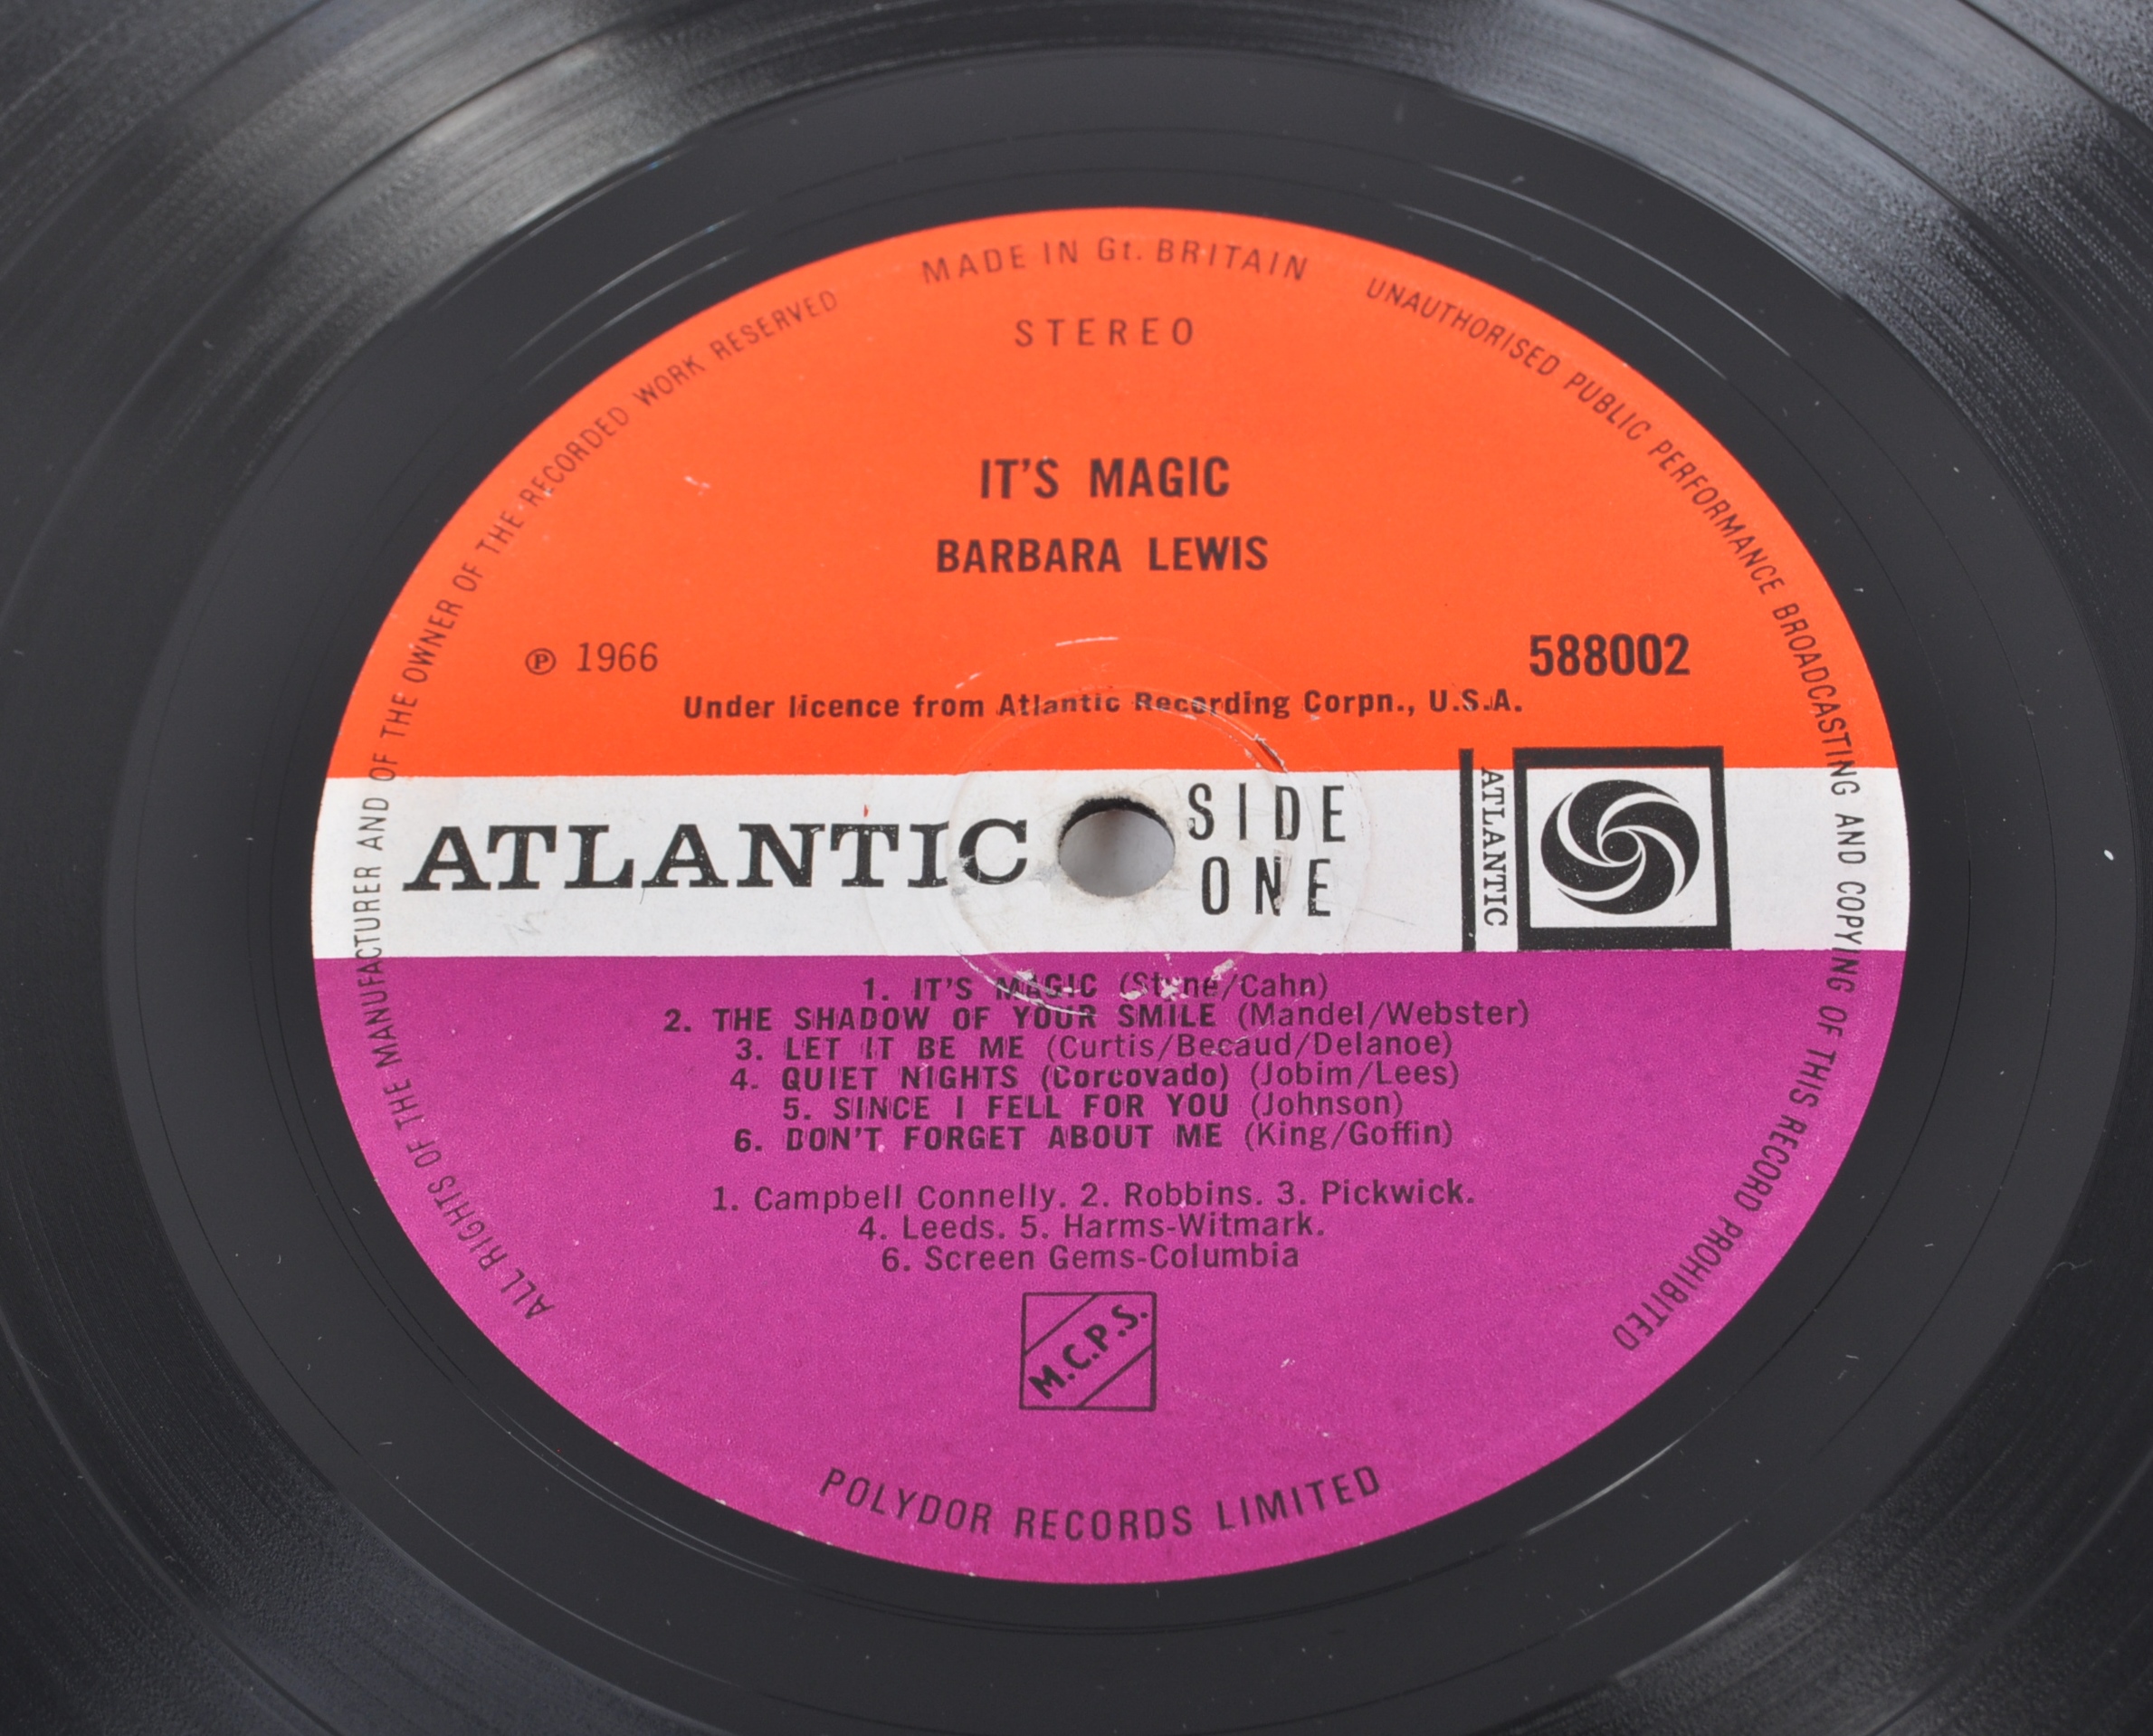 BARBARA LEWIS - IT'S MAGIC - 1966 ATLANTIC RELEASE - 588002 - Image 3 of 4